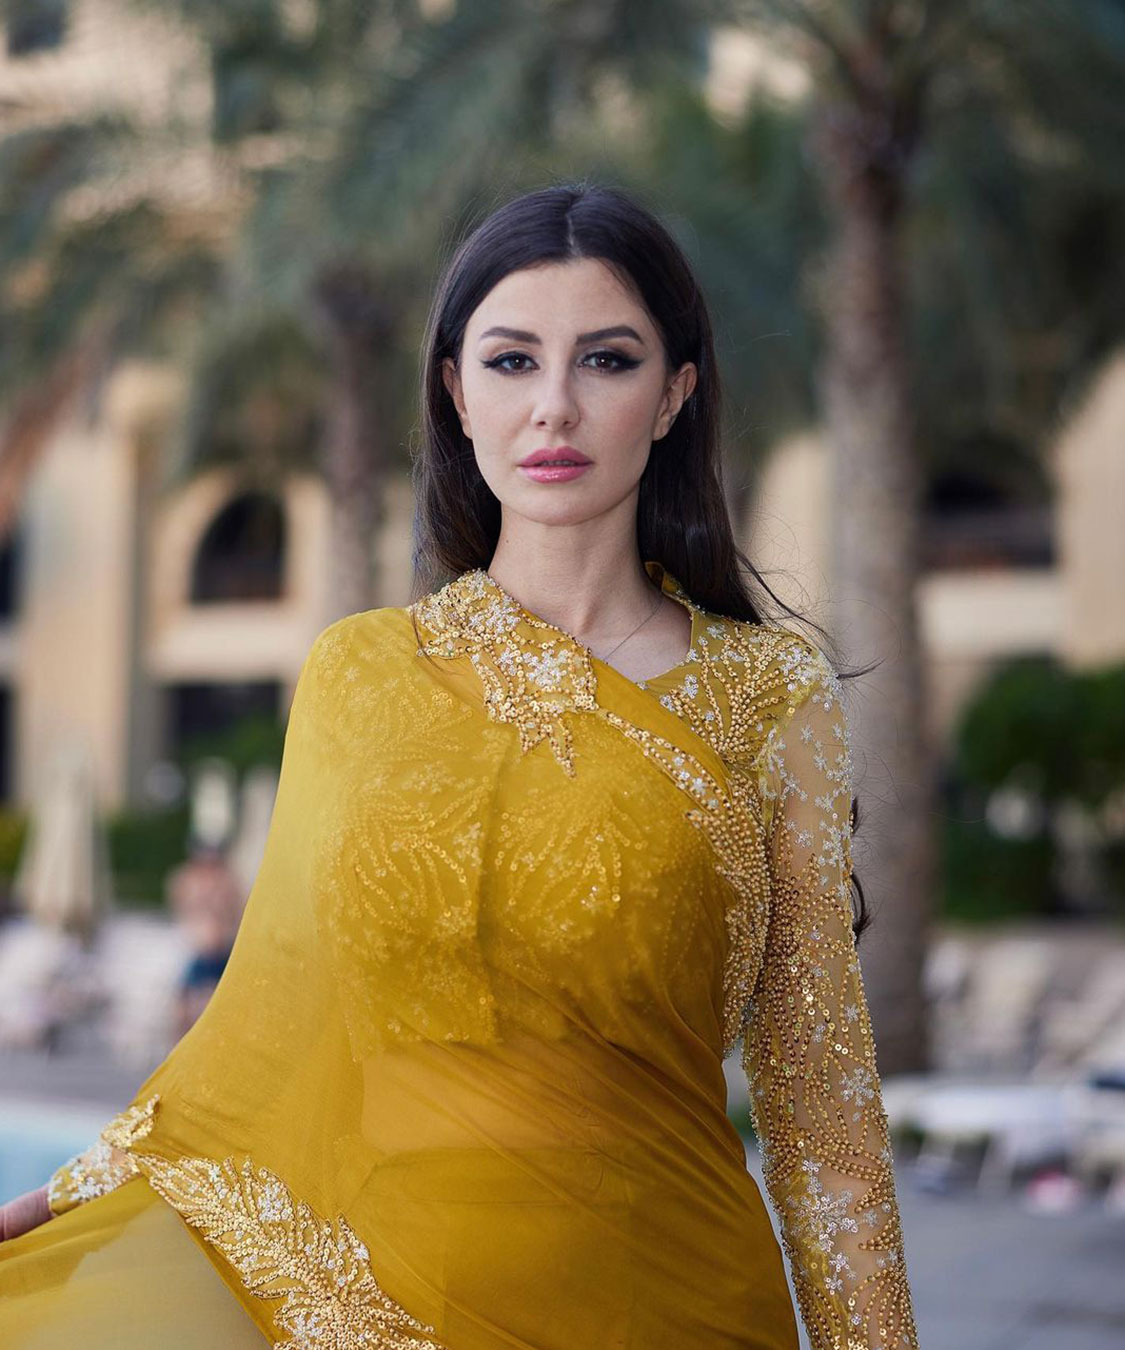 Modern Elegance Redefined: Giorgia Andriani Looks Mesmerizing in Yellow Saree